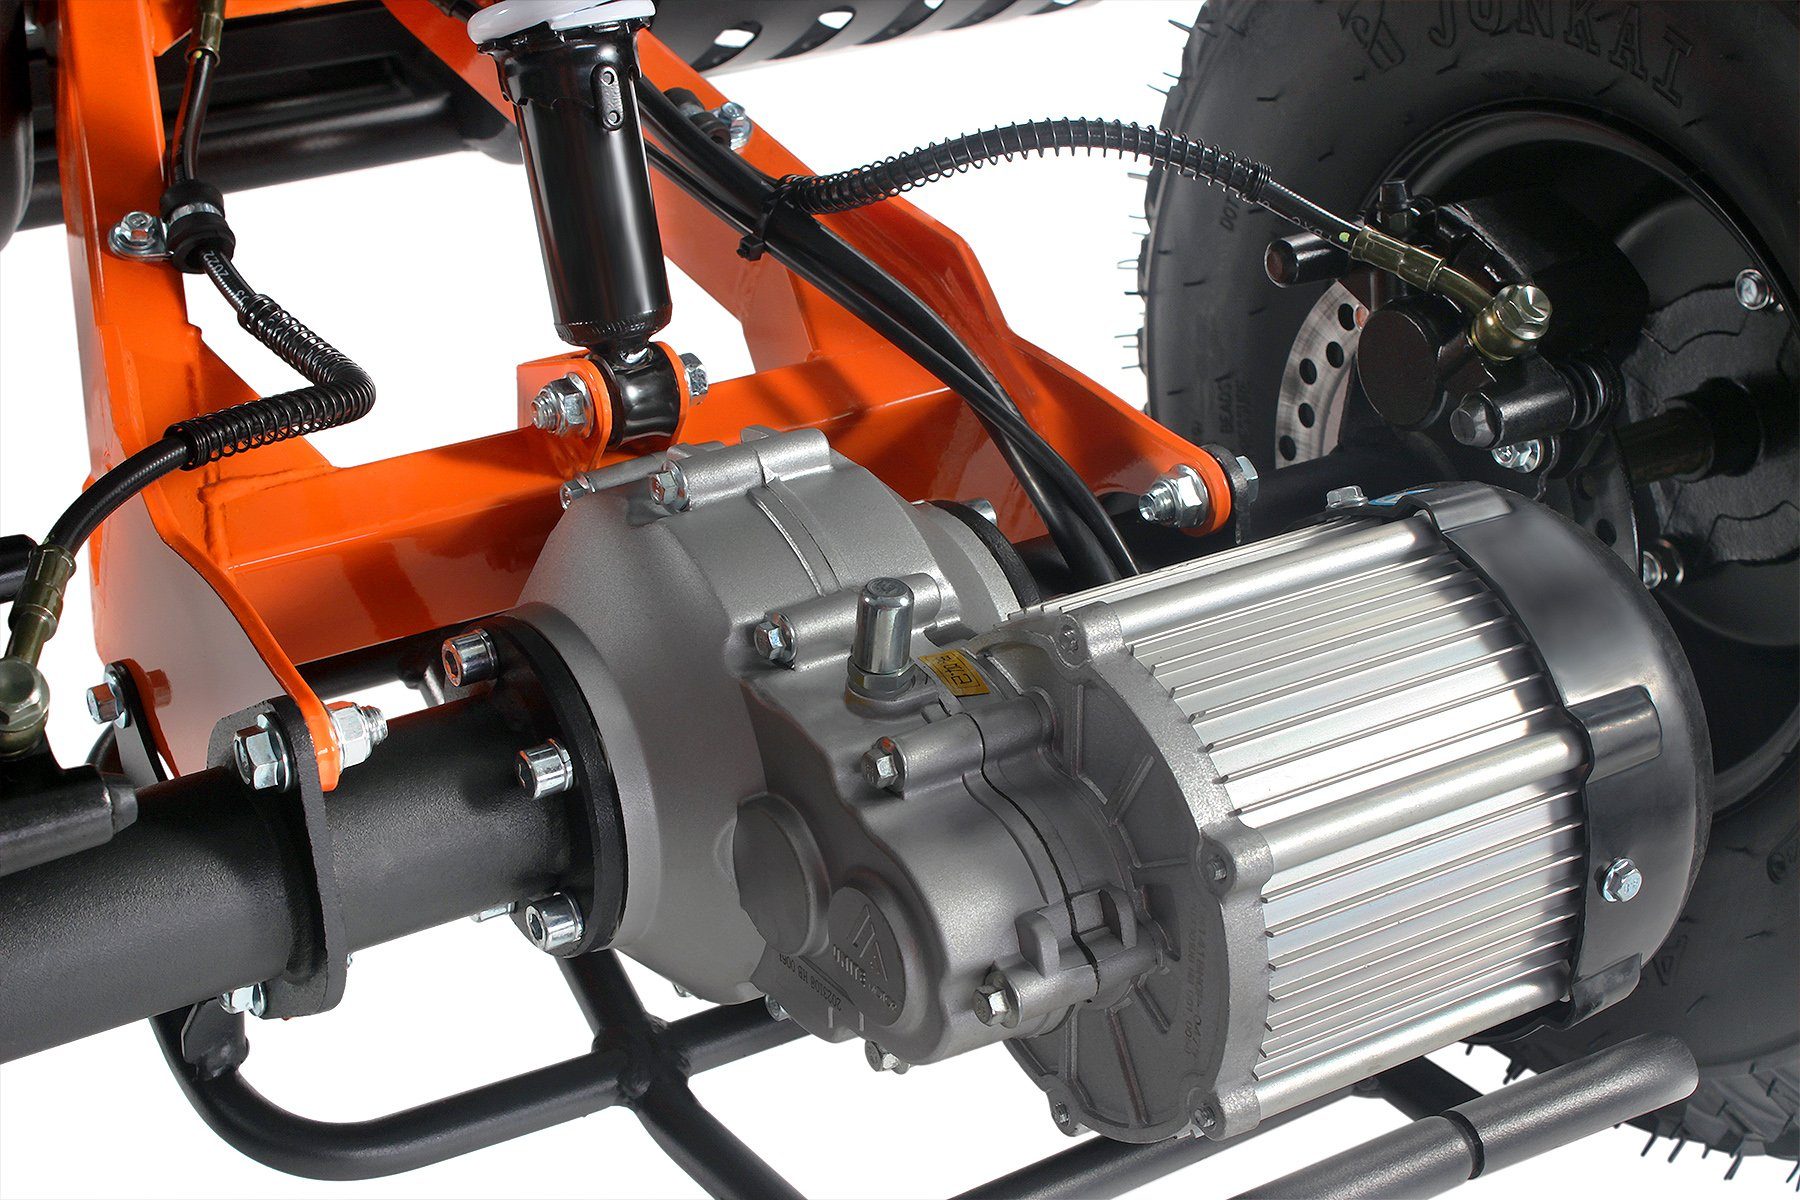 midi Nitro Orange ATV Elektro 48V 8" Replay 1000W E-Quad mit Kinder Quad Motors Differential